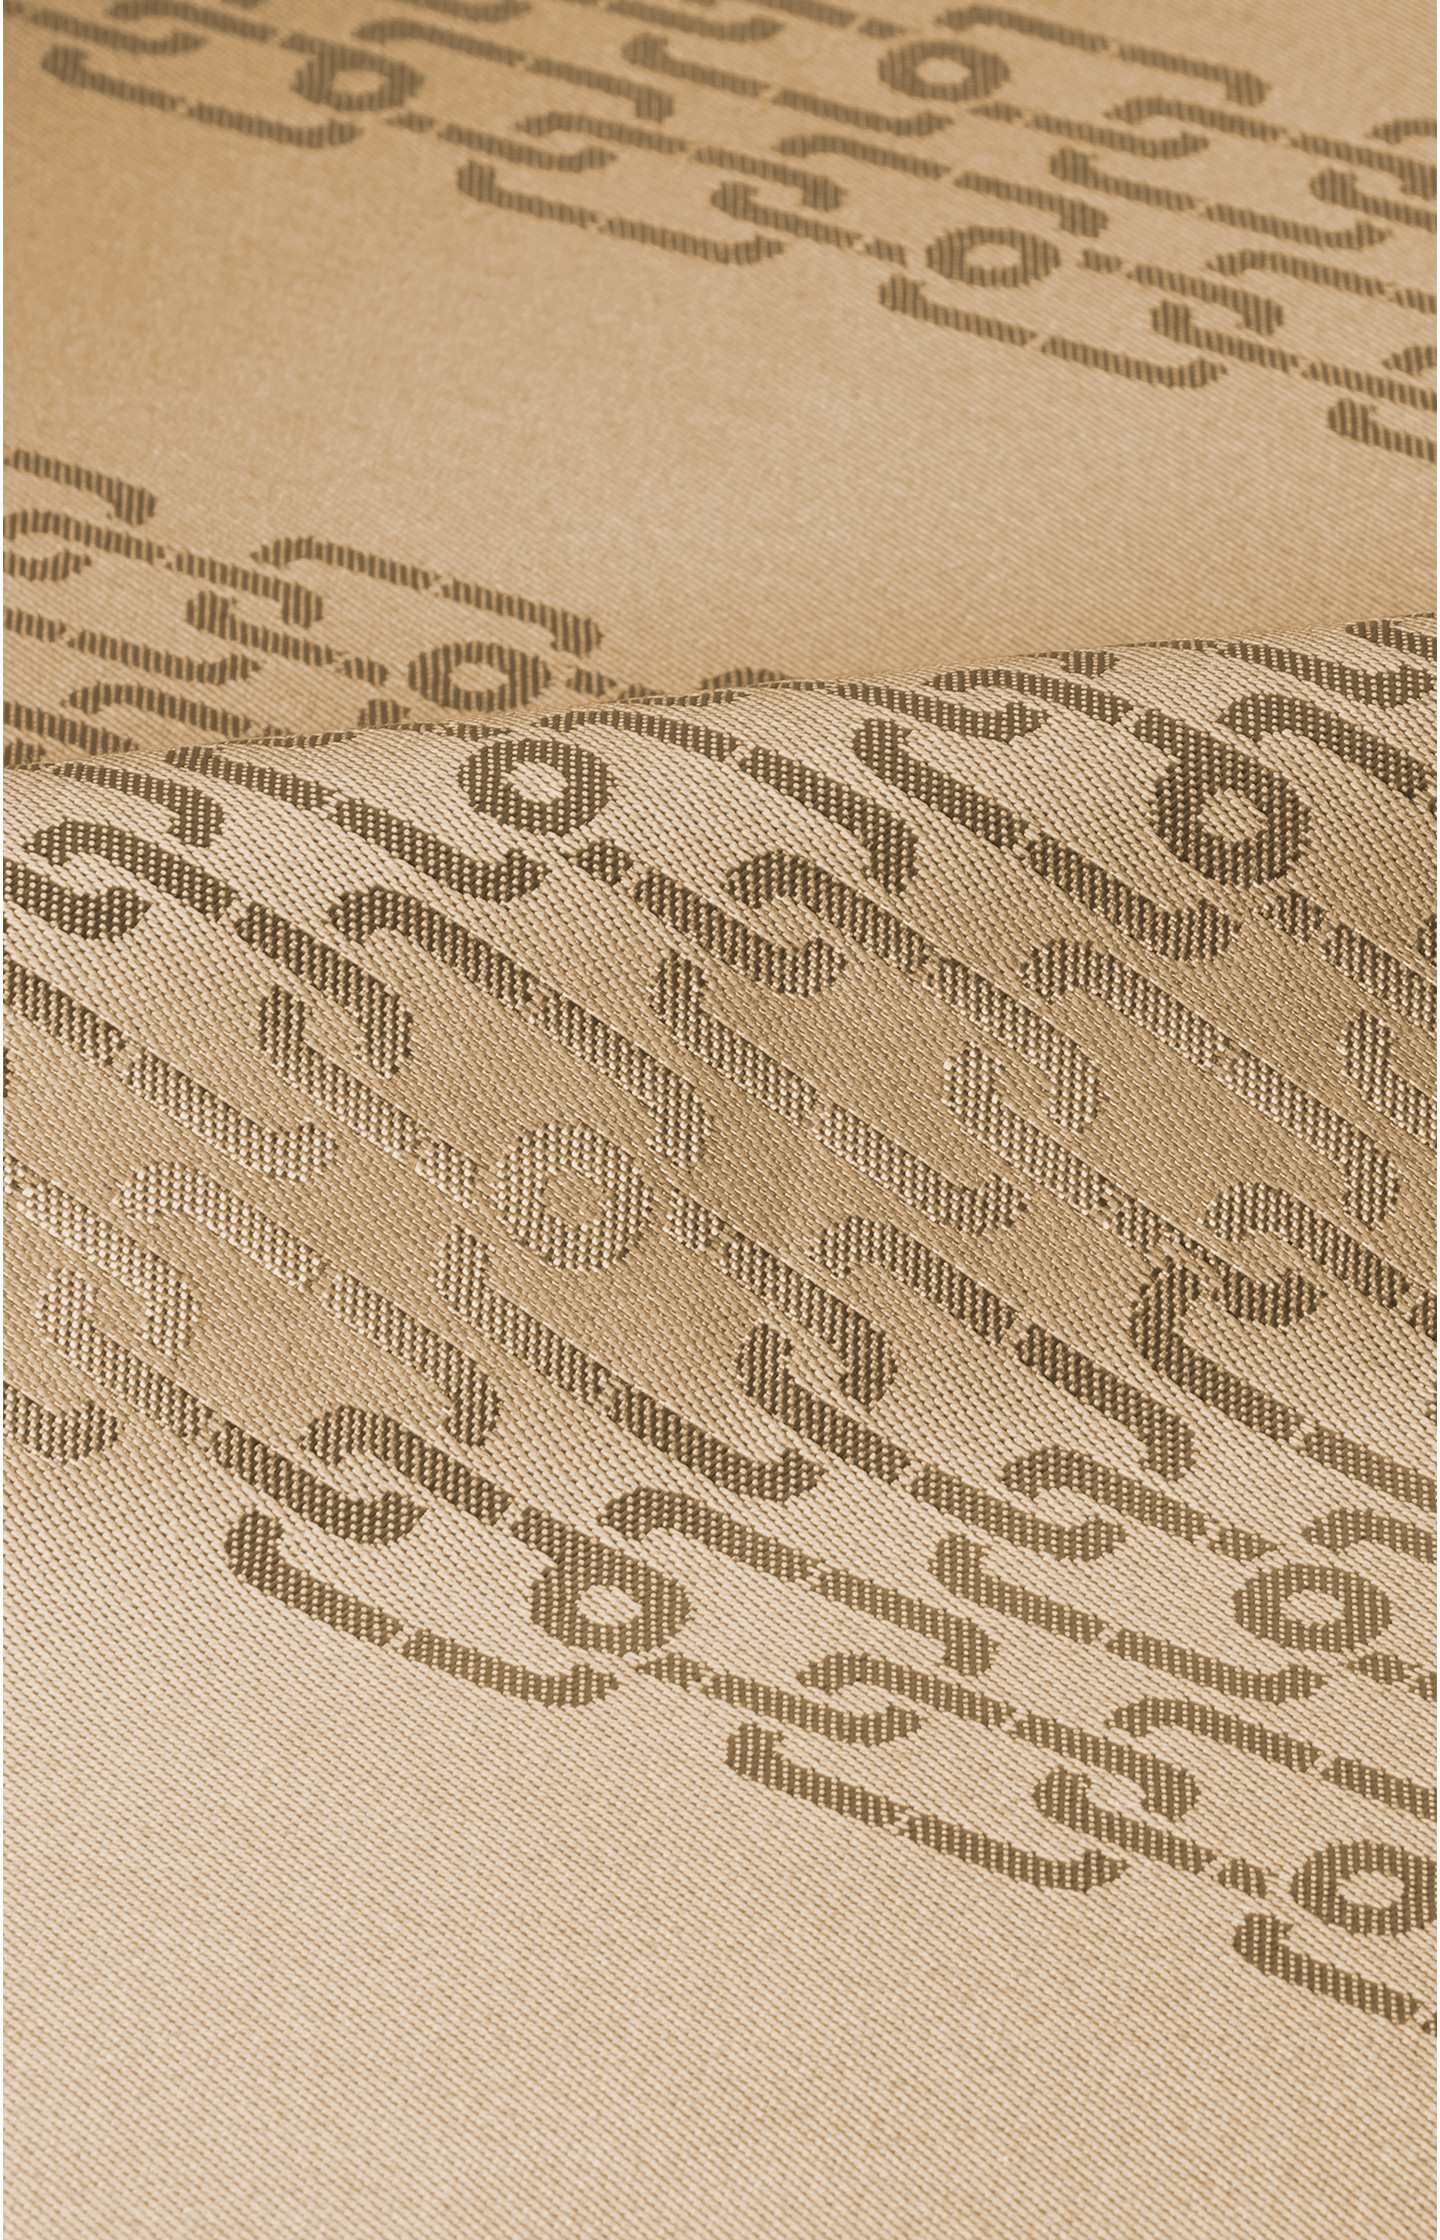 JOOP! CHAINS placemats in gold - set of 2, 36 x 48 cm - in the JOOP! Online  Shop